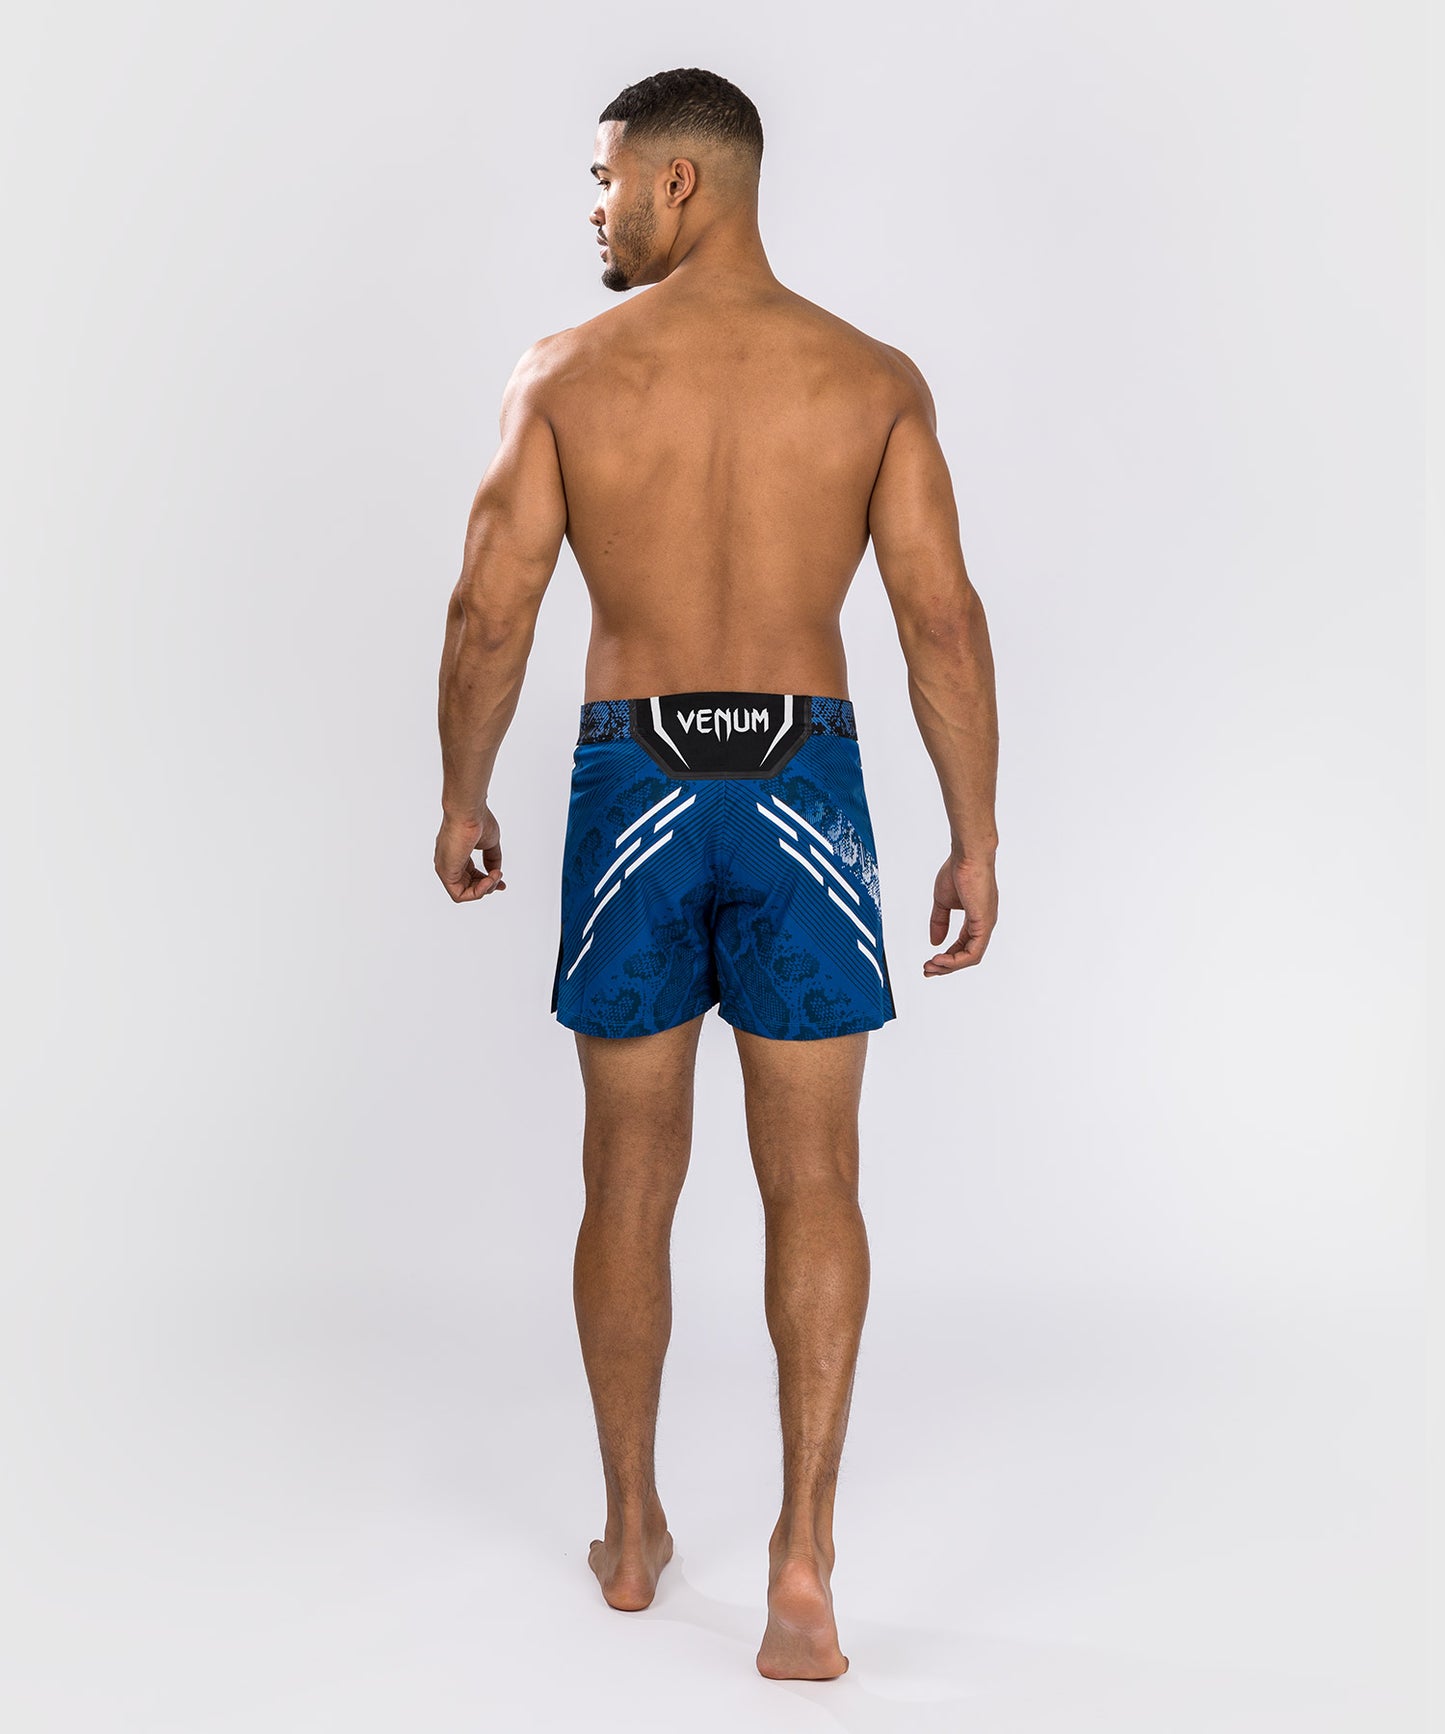 UFC Adrenaline by Venum Personalized Authentic Fight Night Men's Fight Short - Short Fit - Blue